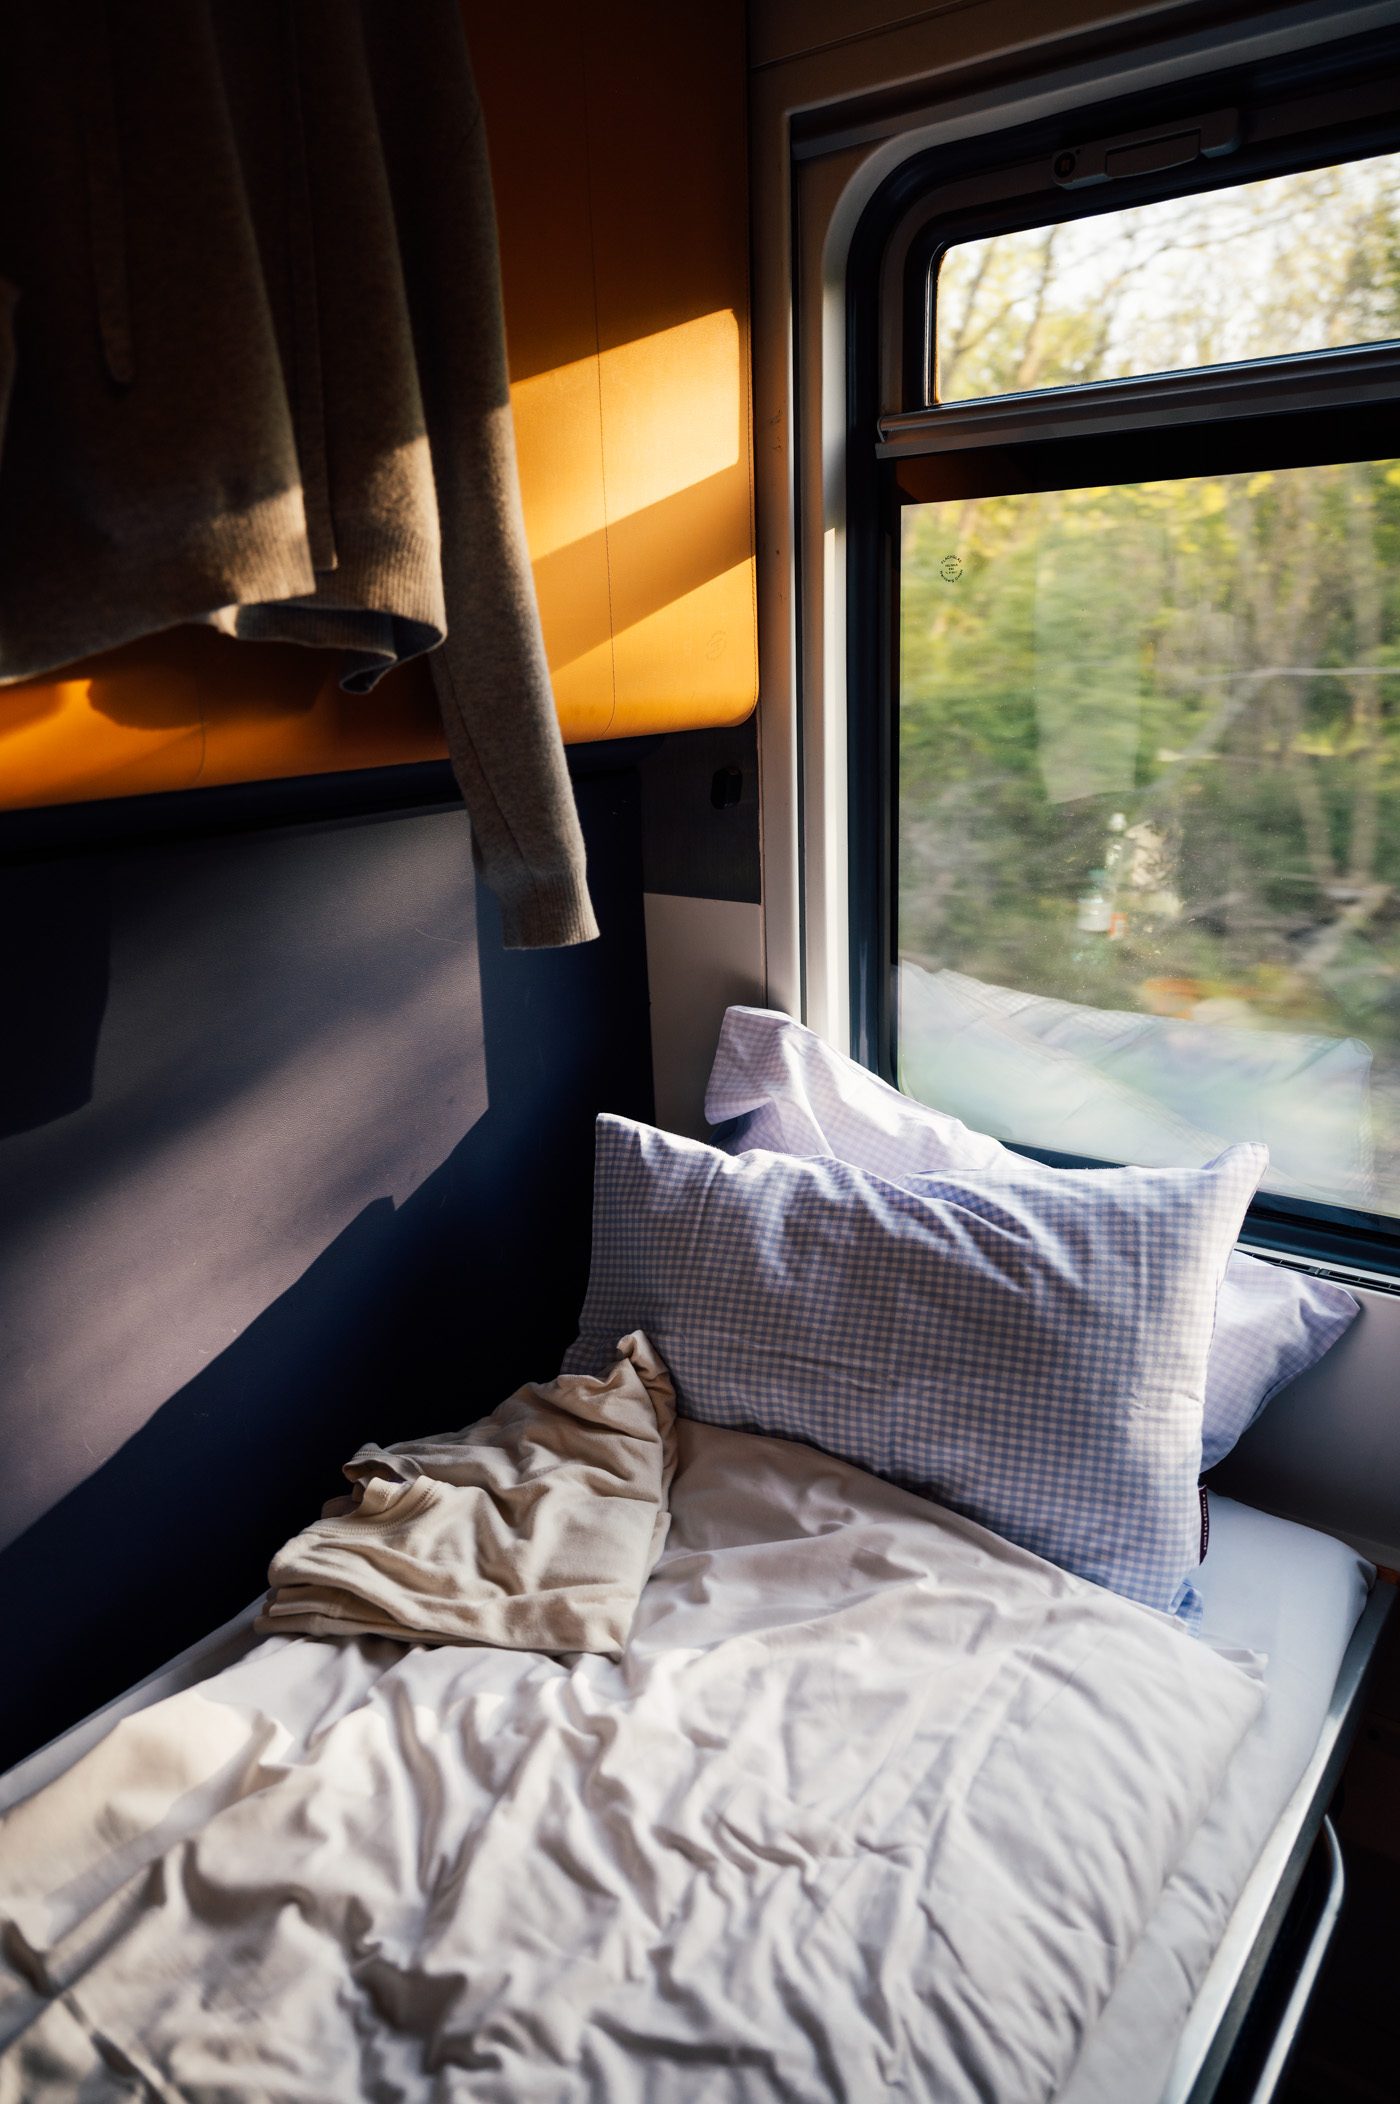 ÖBB Nightjet sleeper cabin - from Vienna to Berlin